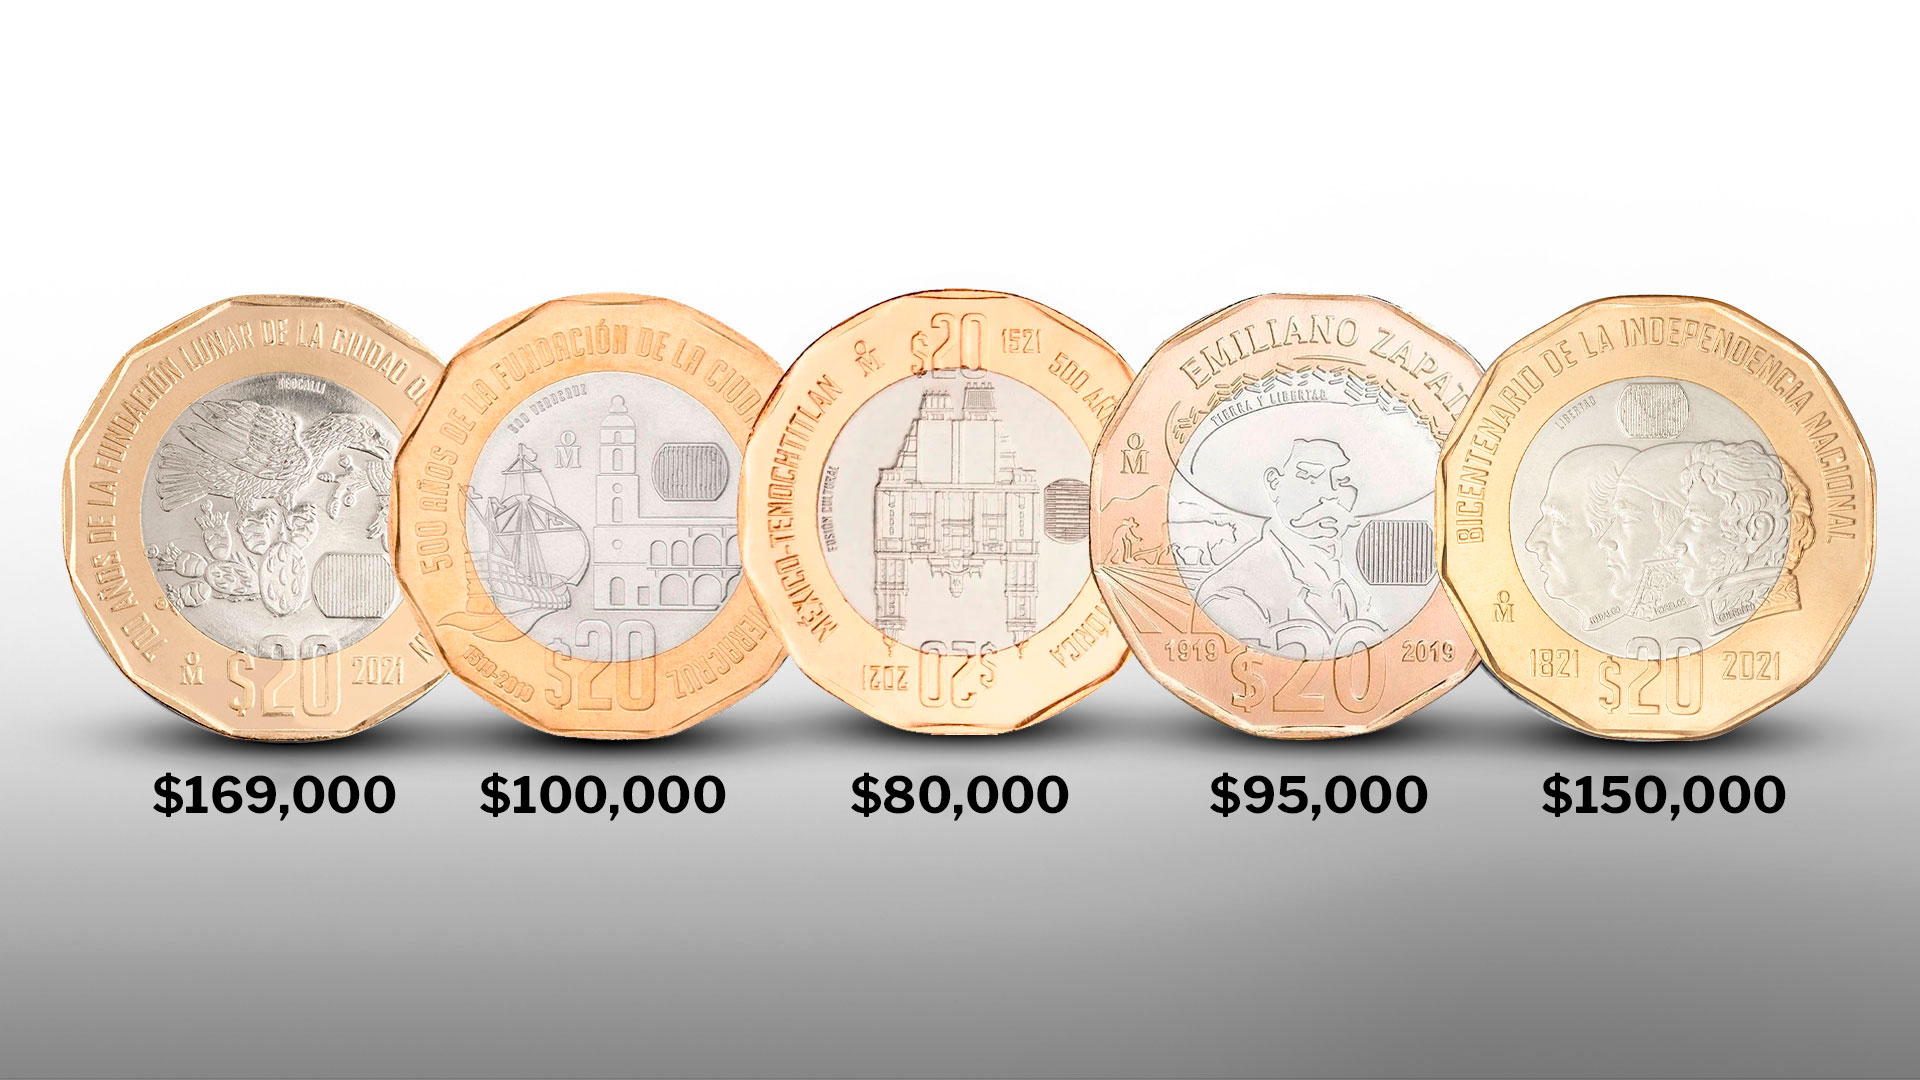 Maquinas que cambian monedas por billetes